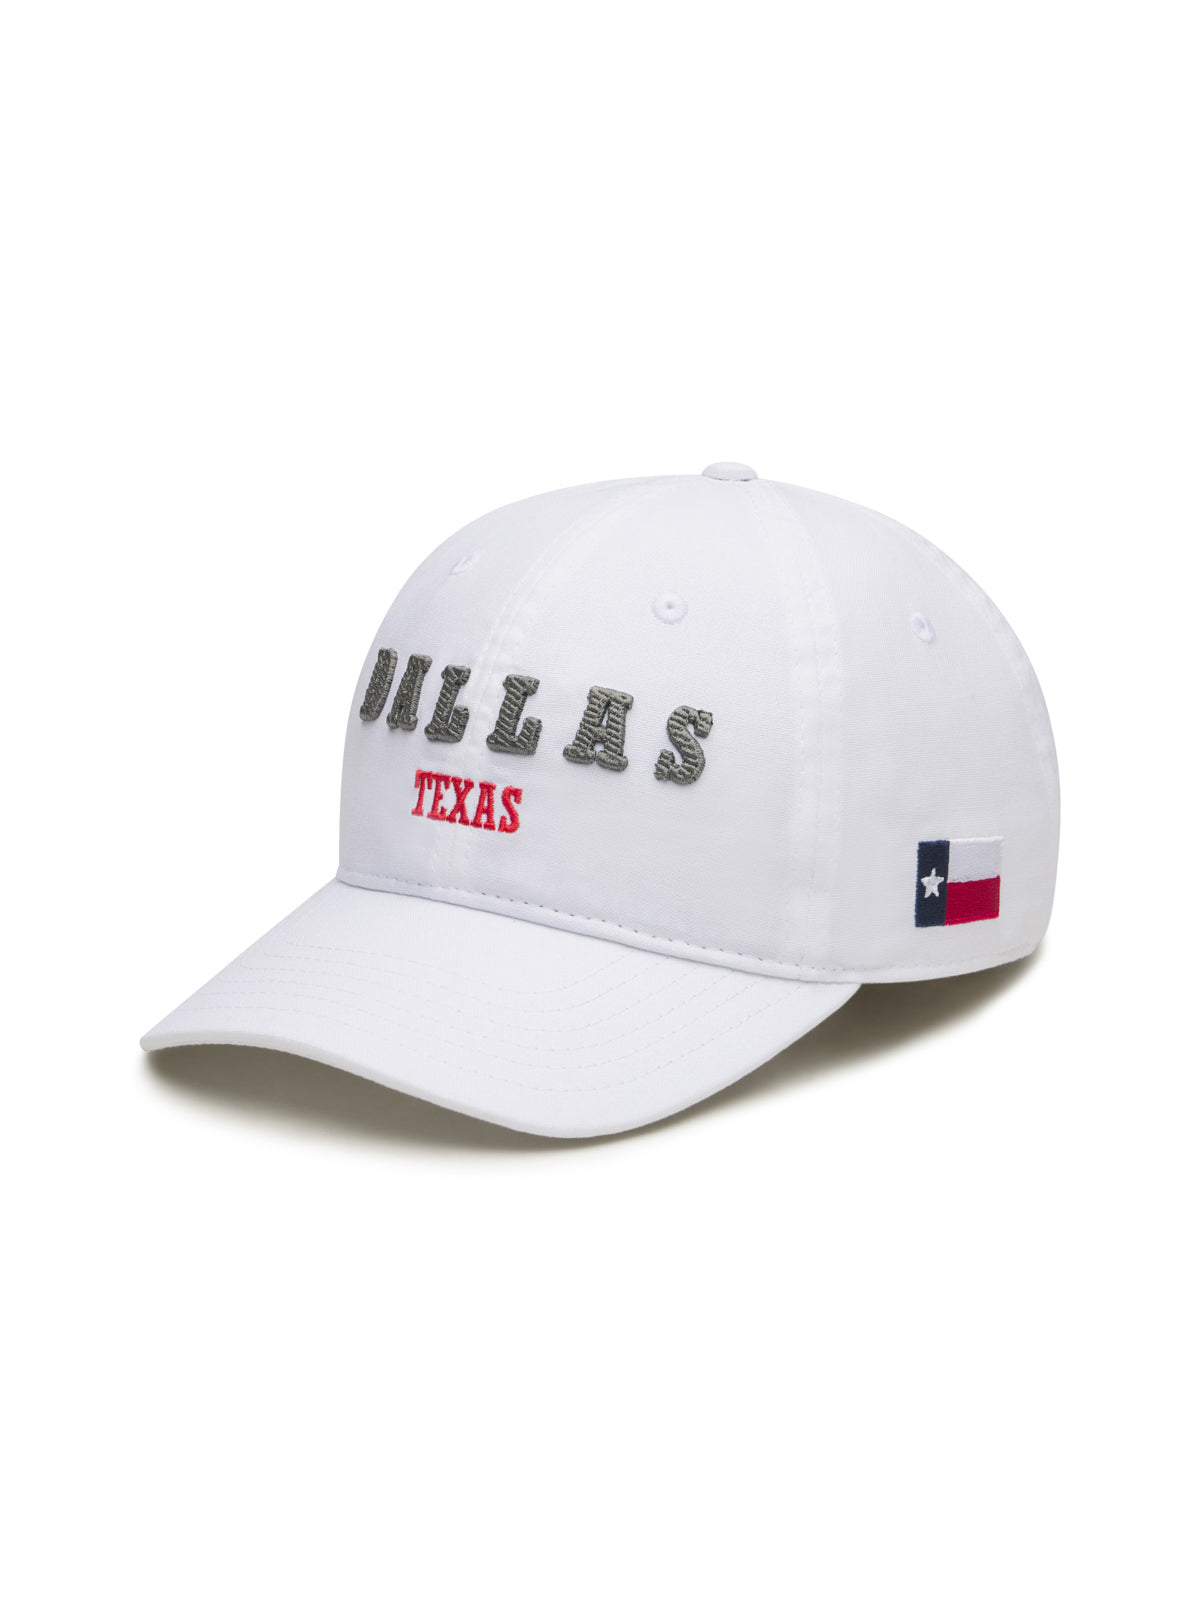 Dallas, TX Hat - tasc Performance (White)